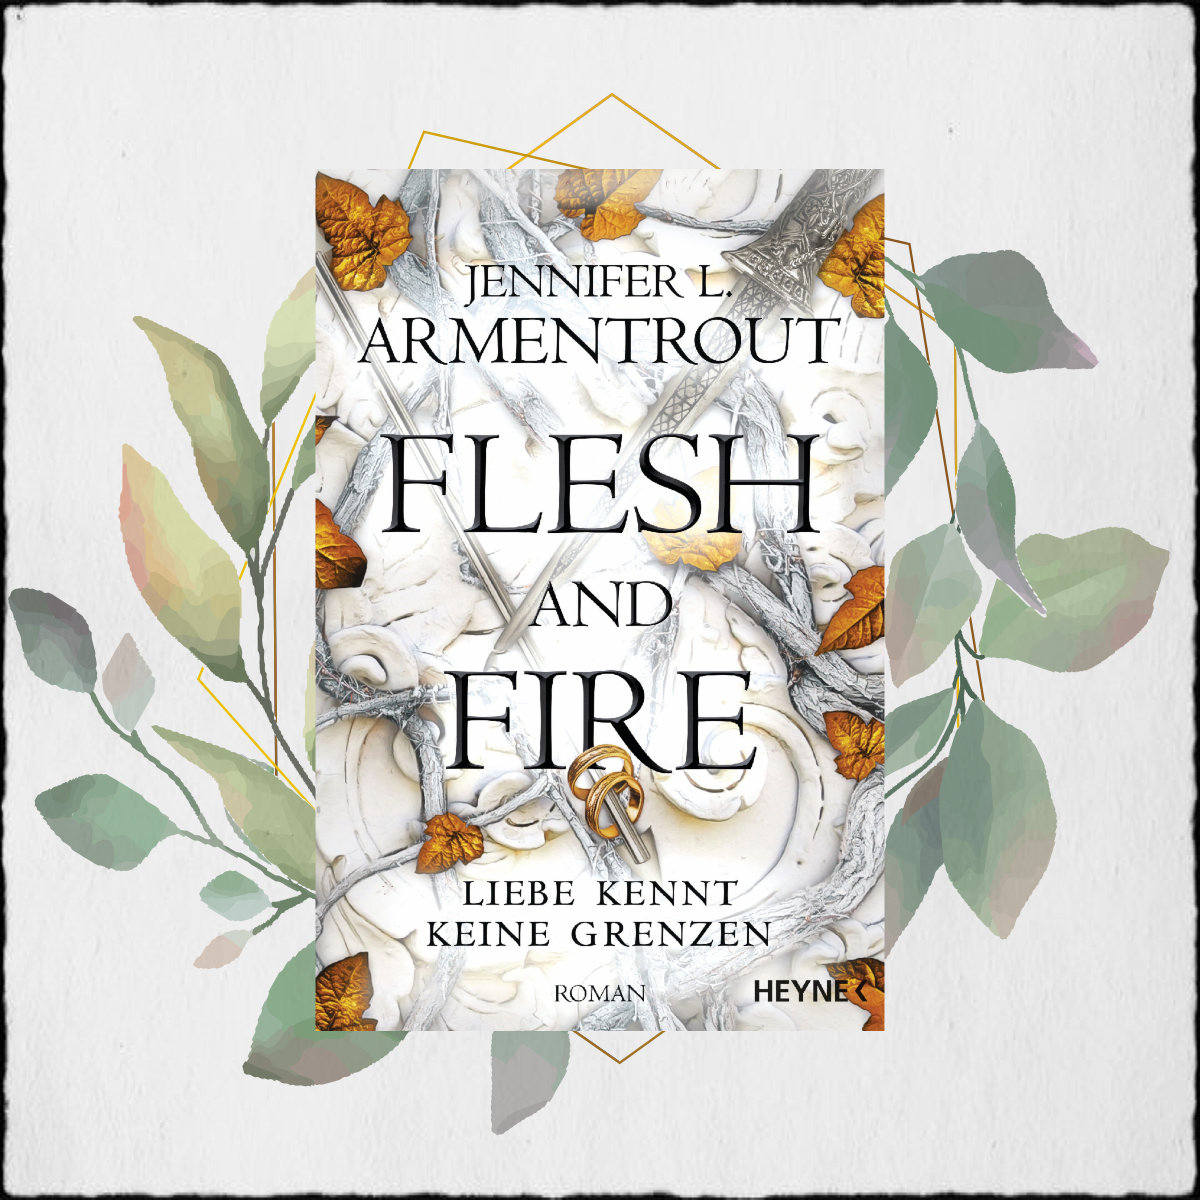 Jennifer L. Armentrout "Flesh & Fire – Liebe kennt keine Grenzen 2" ©2022 Heyne Verlag (Penguin Random House Verlagsgruppe GmbH)